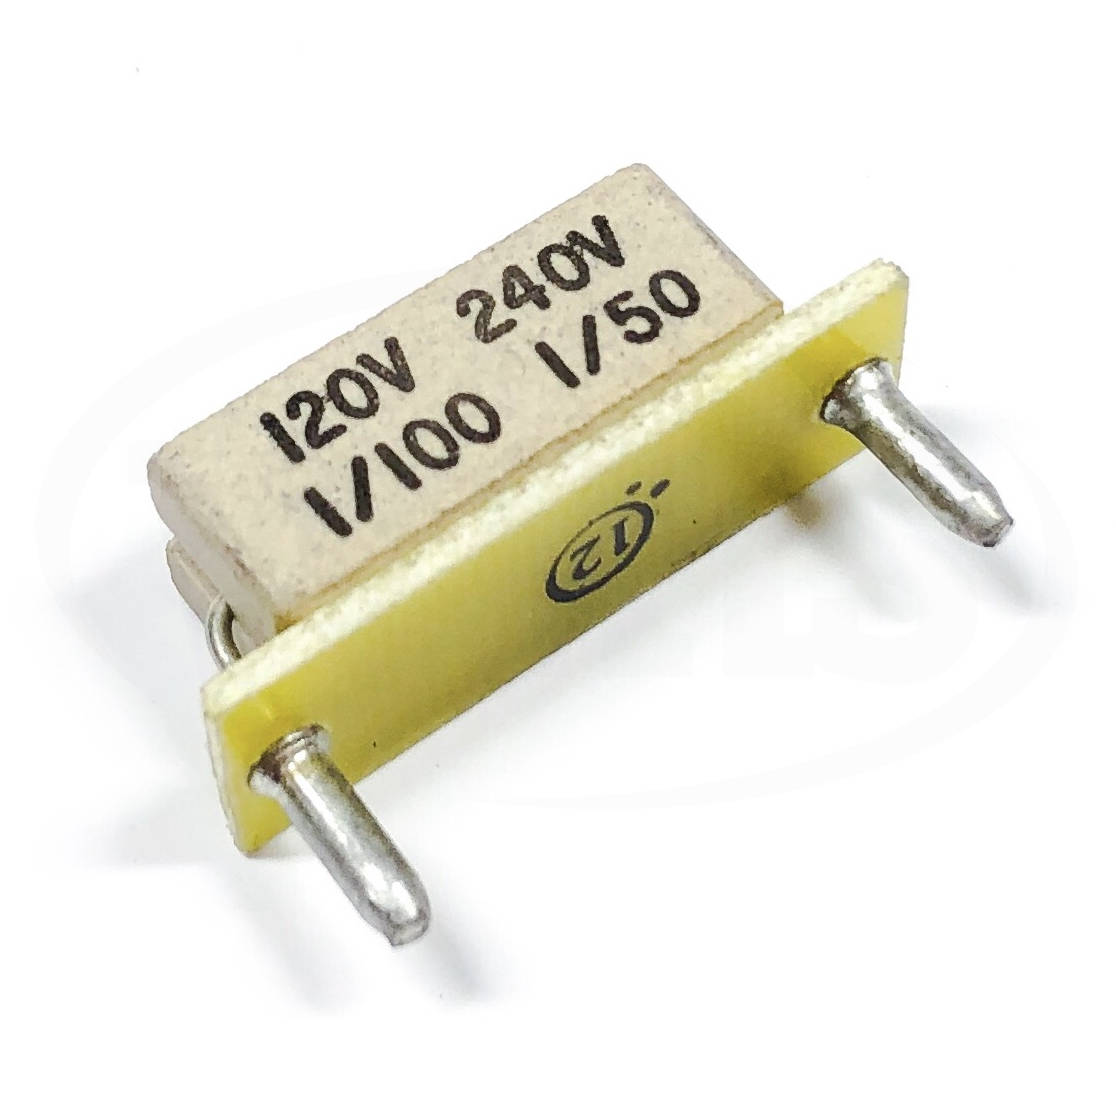 KB/KBIC DC Motor Control Plug-In Horsepower Resistor # 9843 0.01 Ohms. 